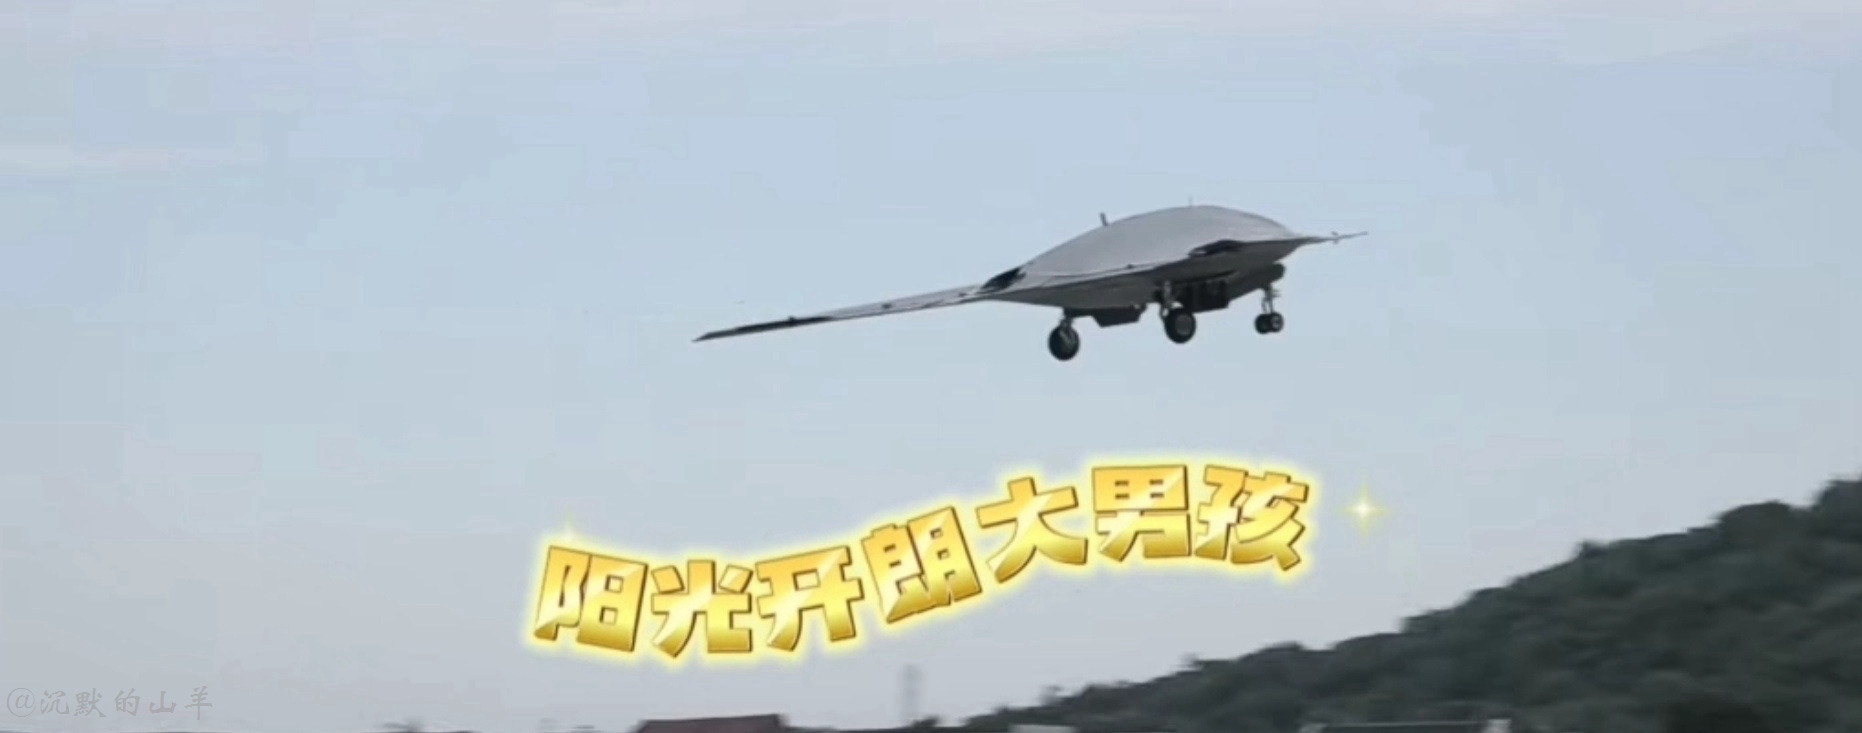 CASIC UAV 2023 idufsudgf.jpg